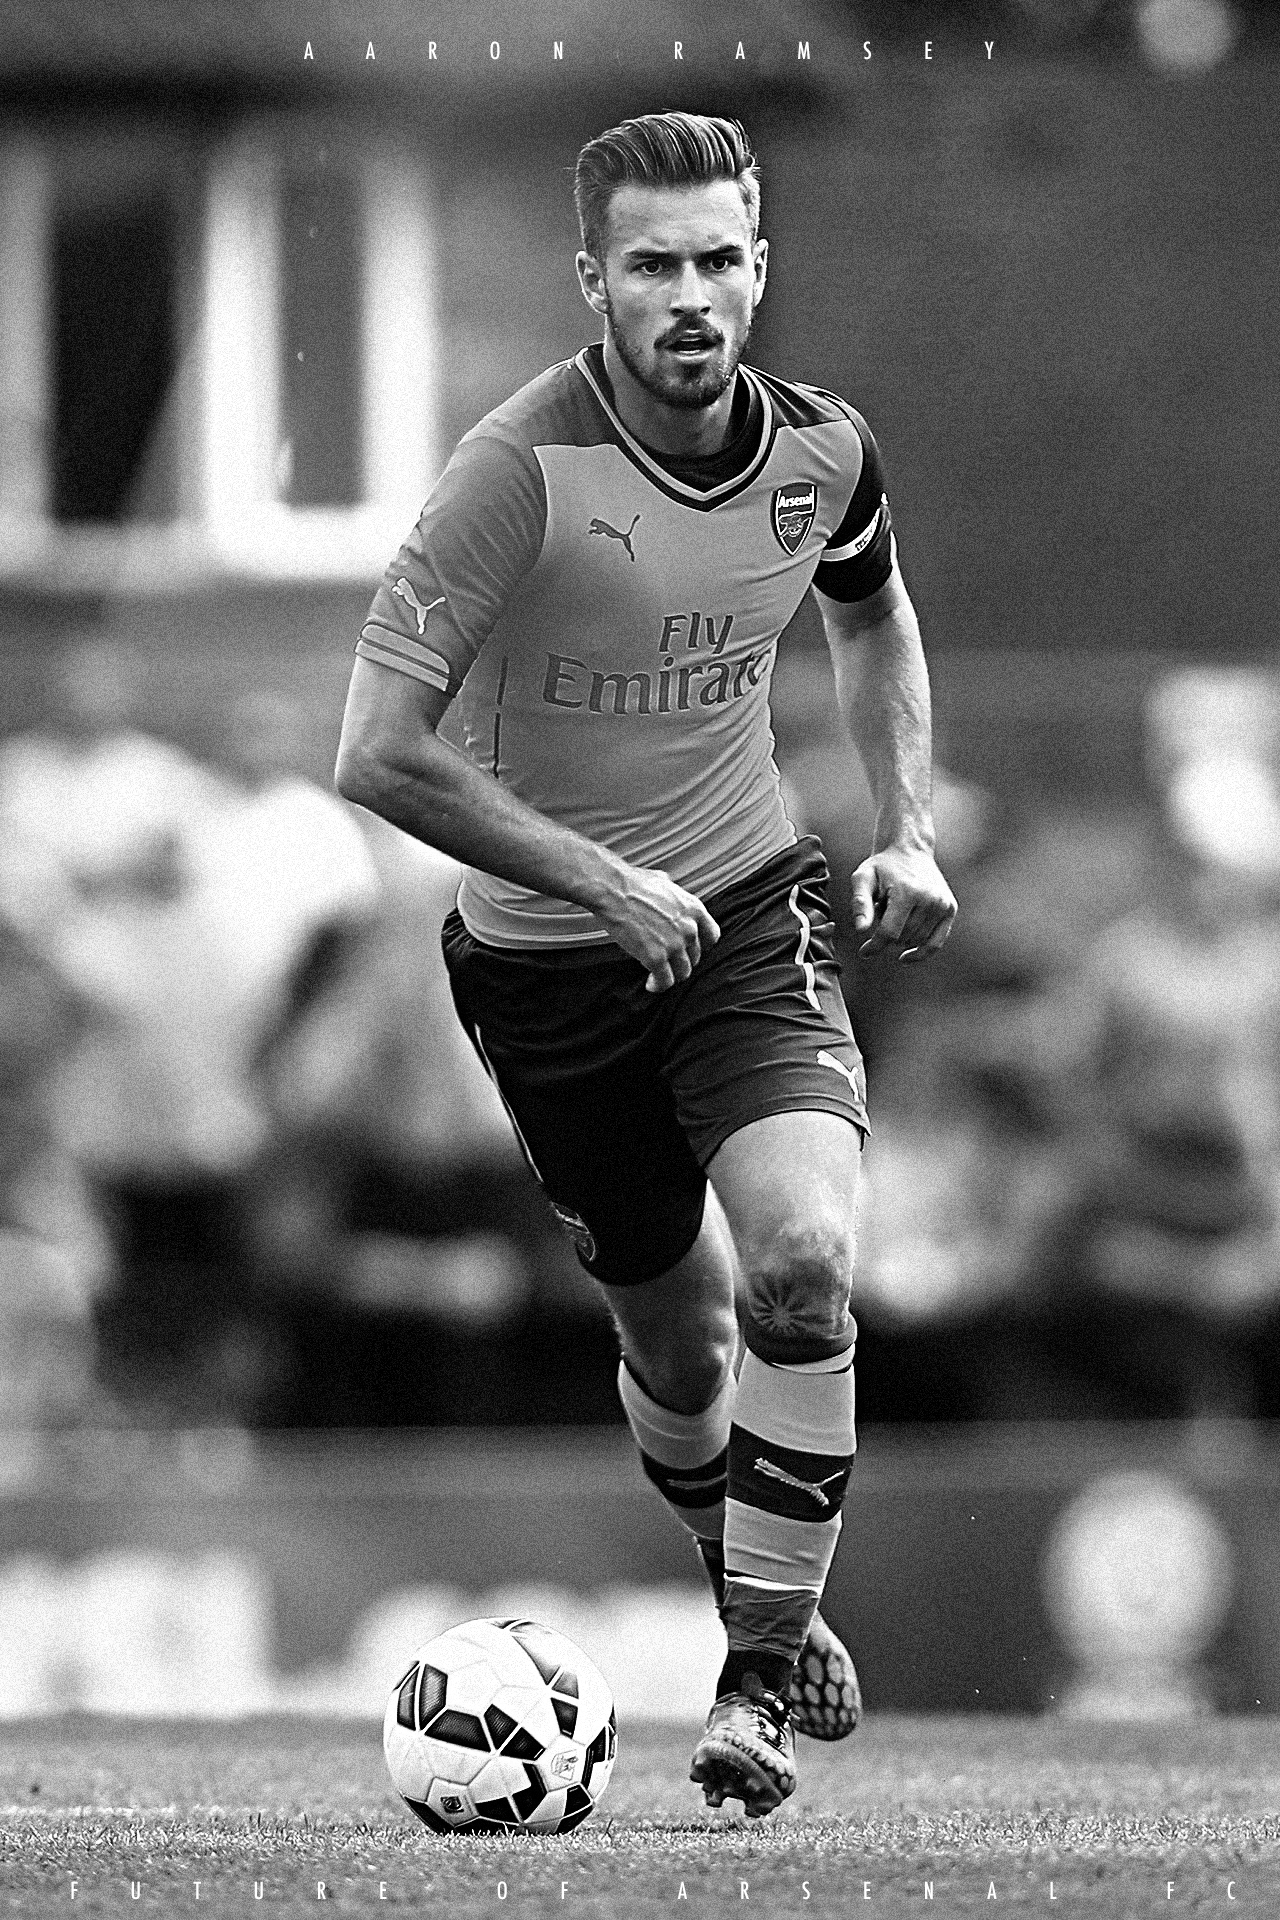 Aaron Ramsey of Arsenal F.C